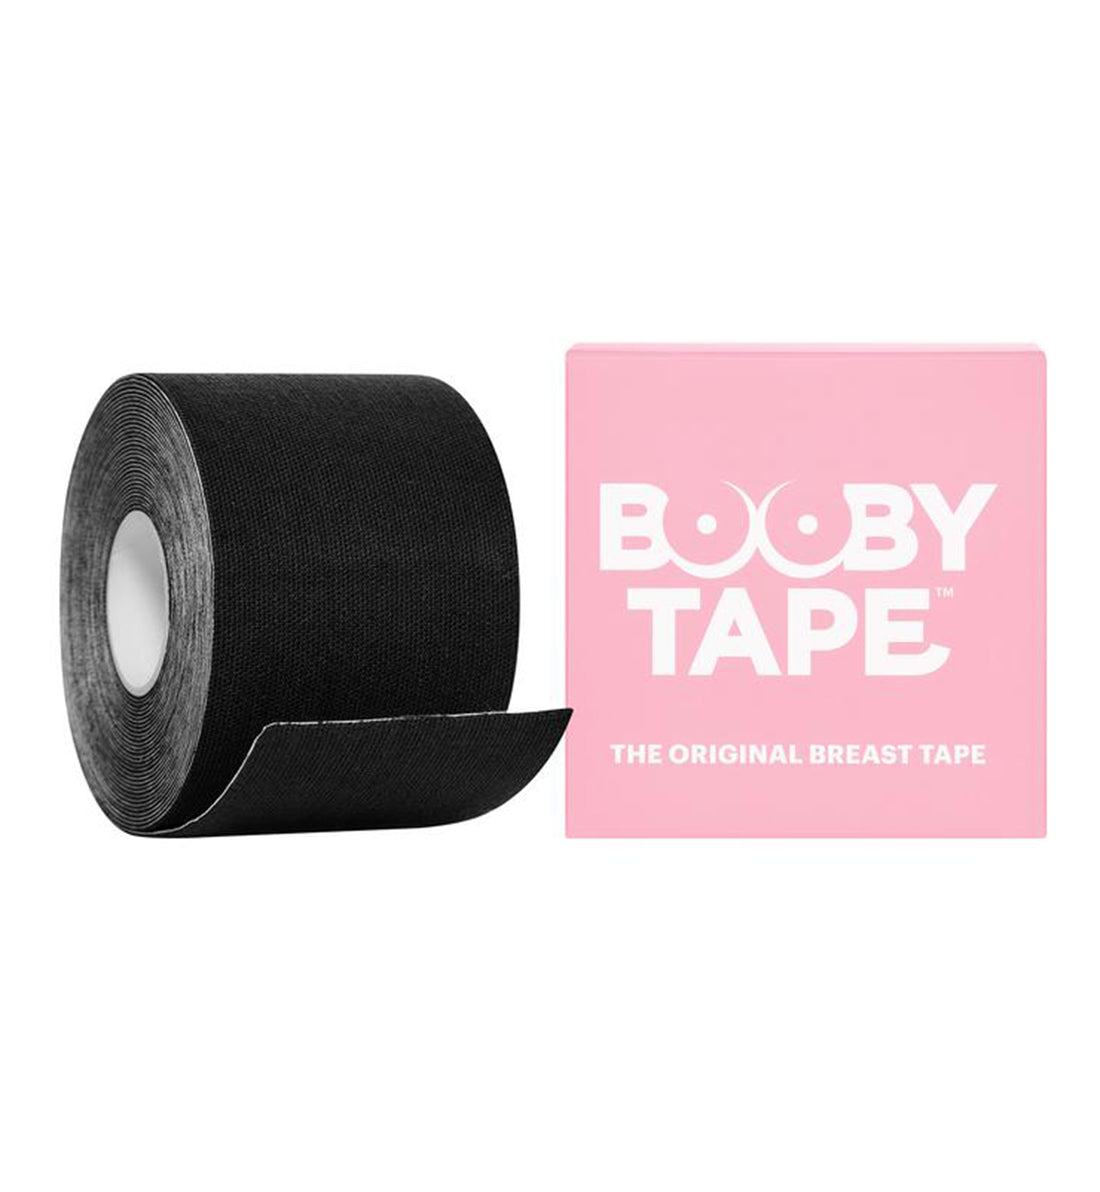 BOOBY TAPE The Original Breast Tape,5 m,Black - Black,One Size